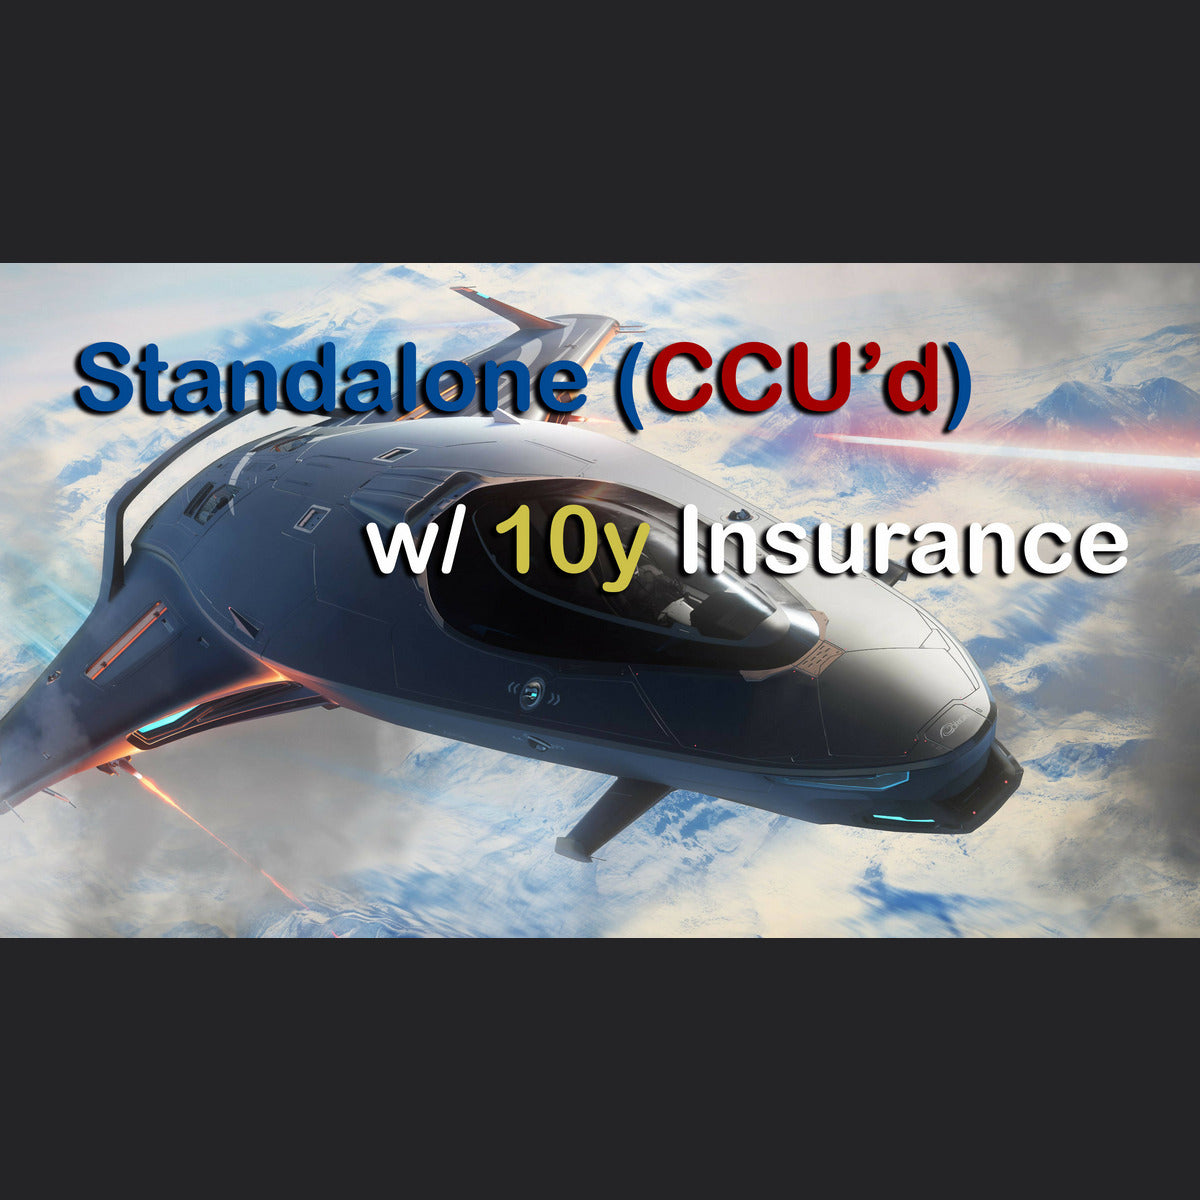 125a - 10y Insurance